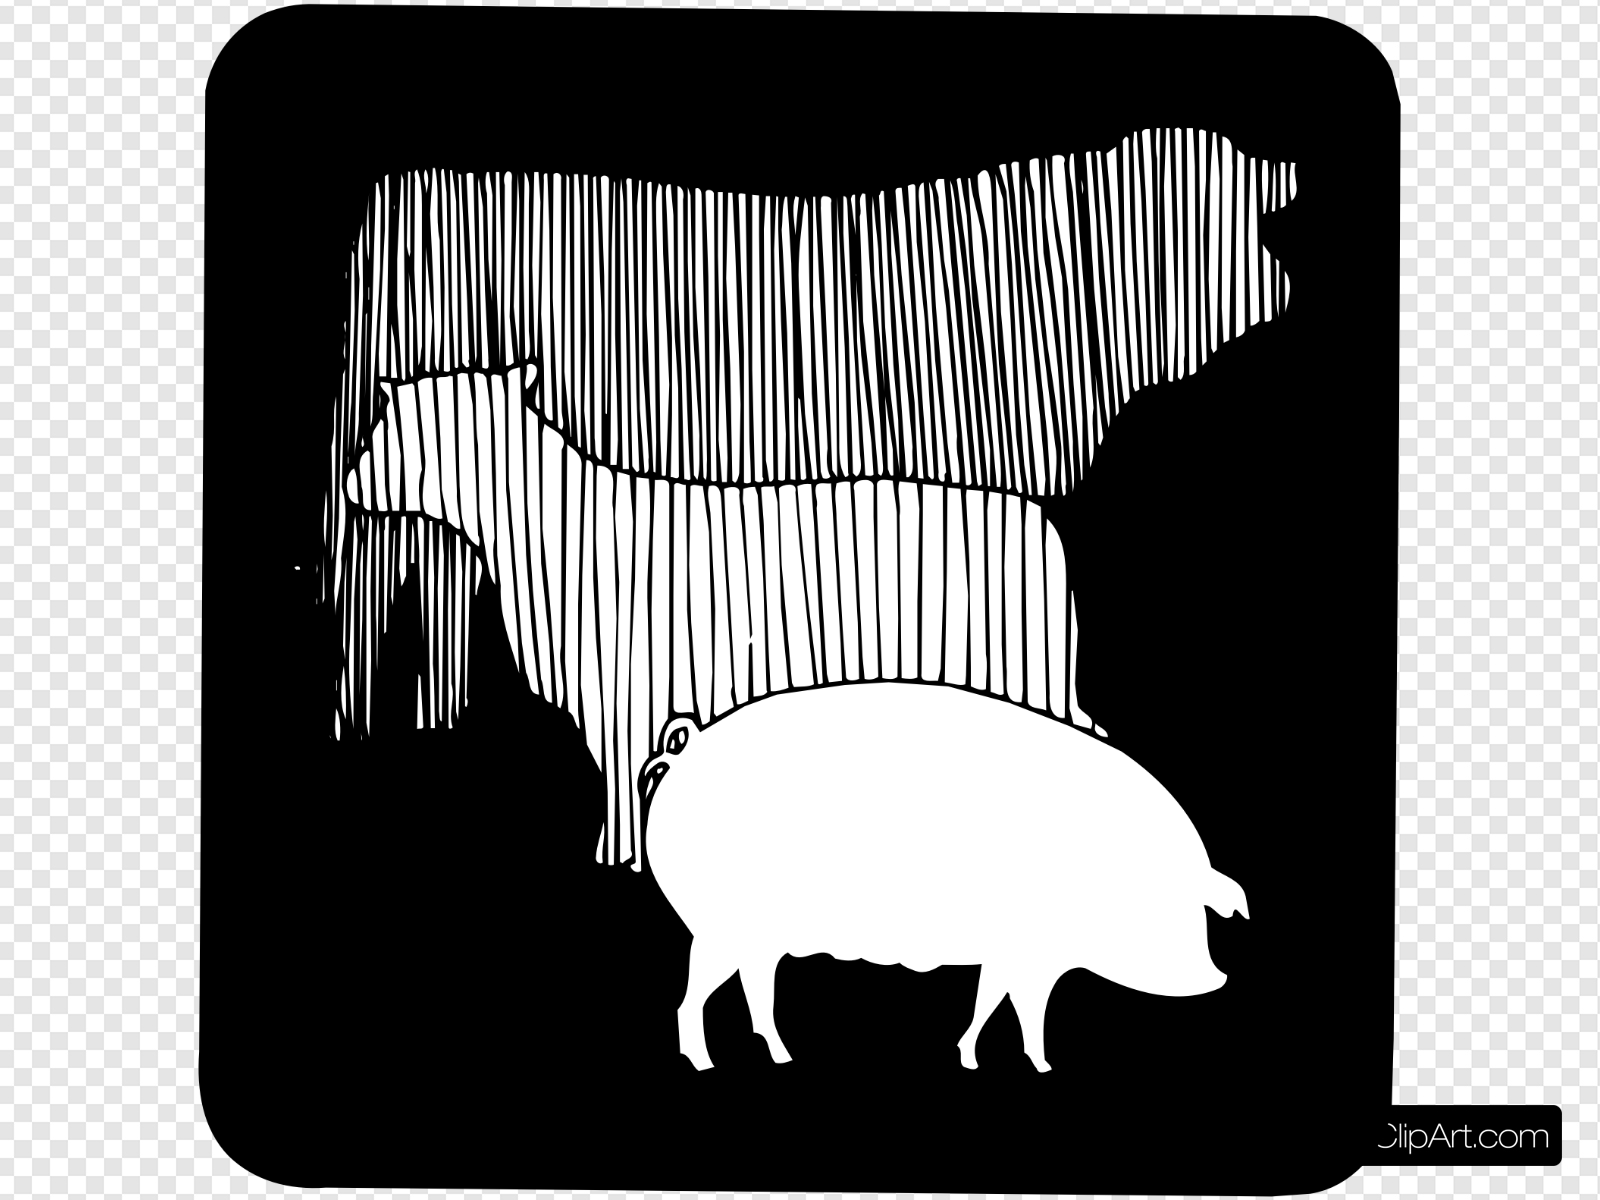 Farm Animal Collage Clip art, Icon and SVG.